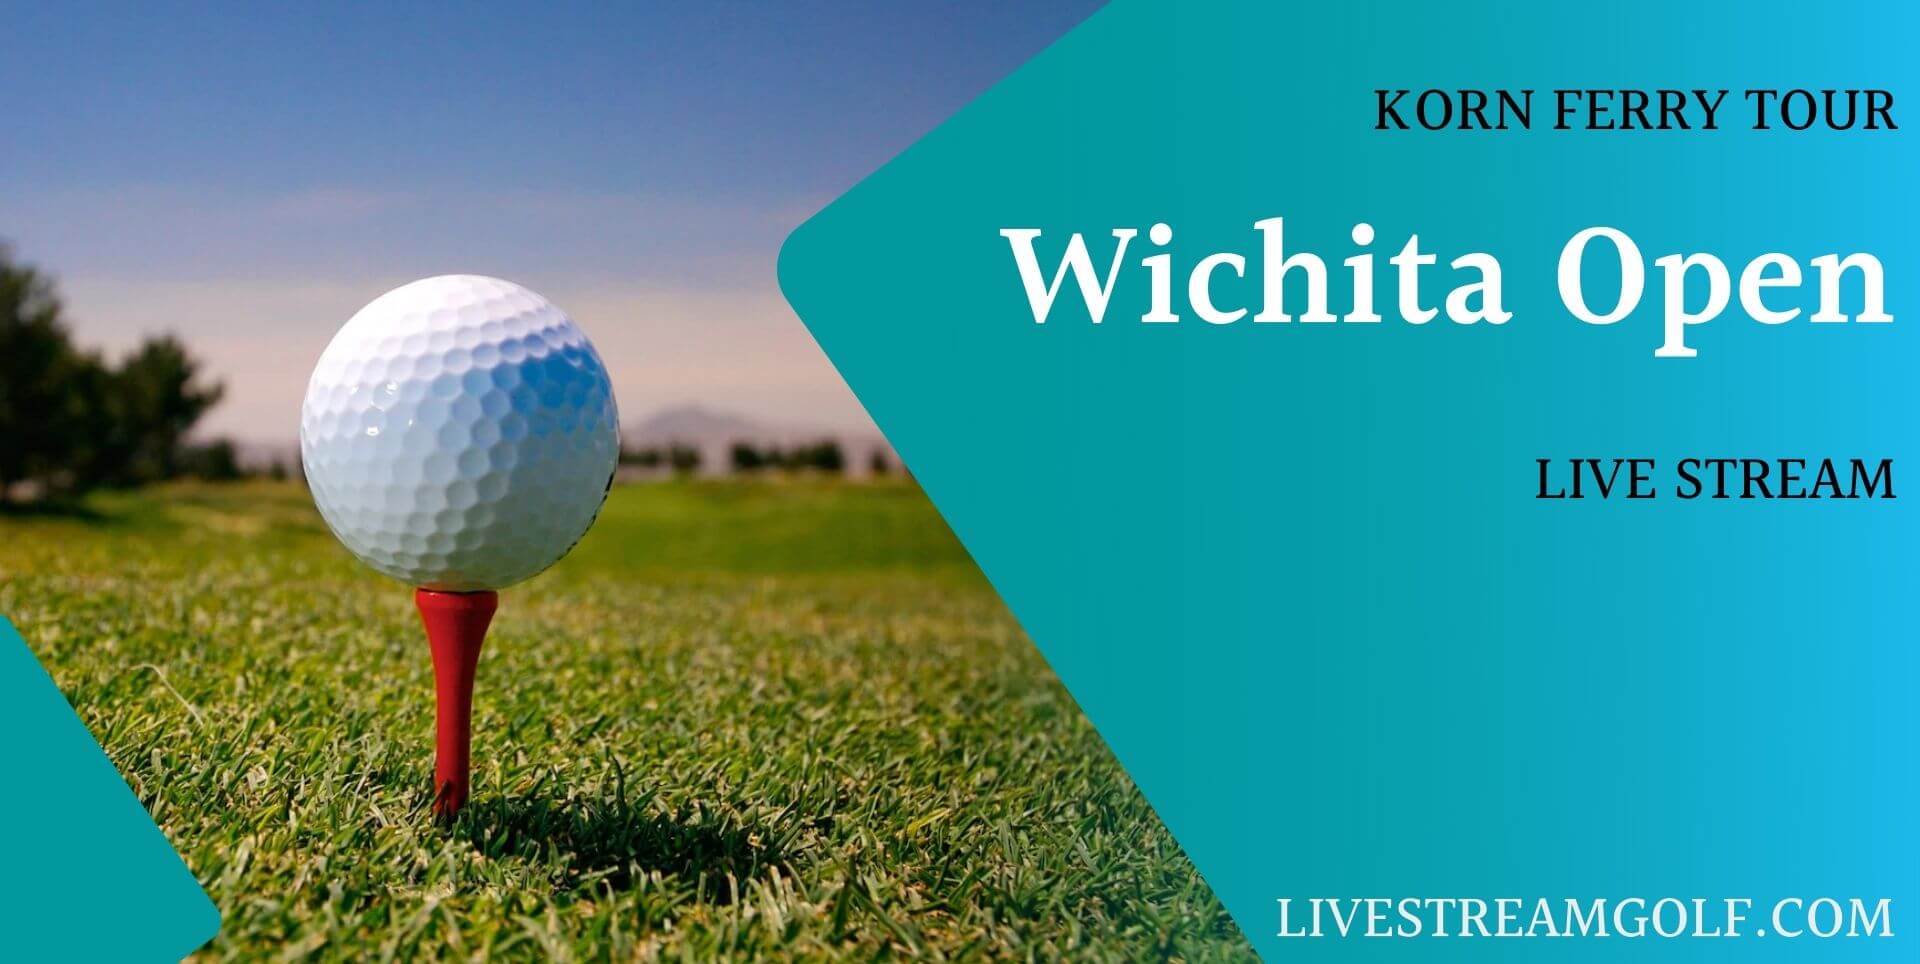 Wichita Open Day 2 Live Stream: Korn Ferry 2022